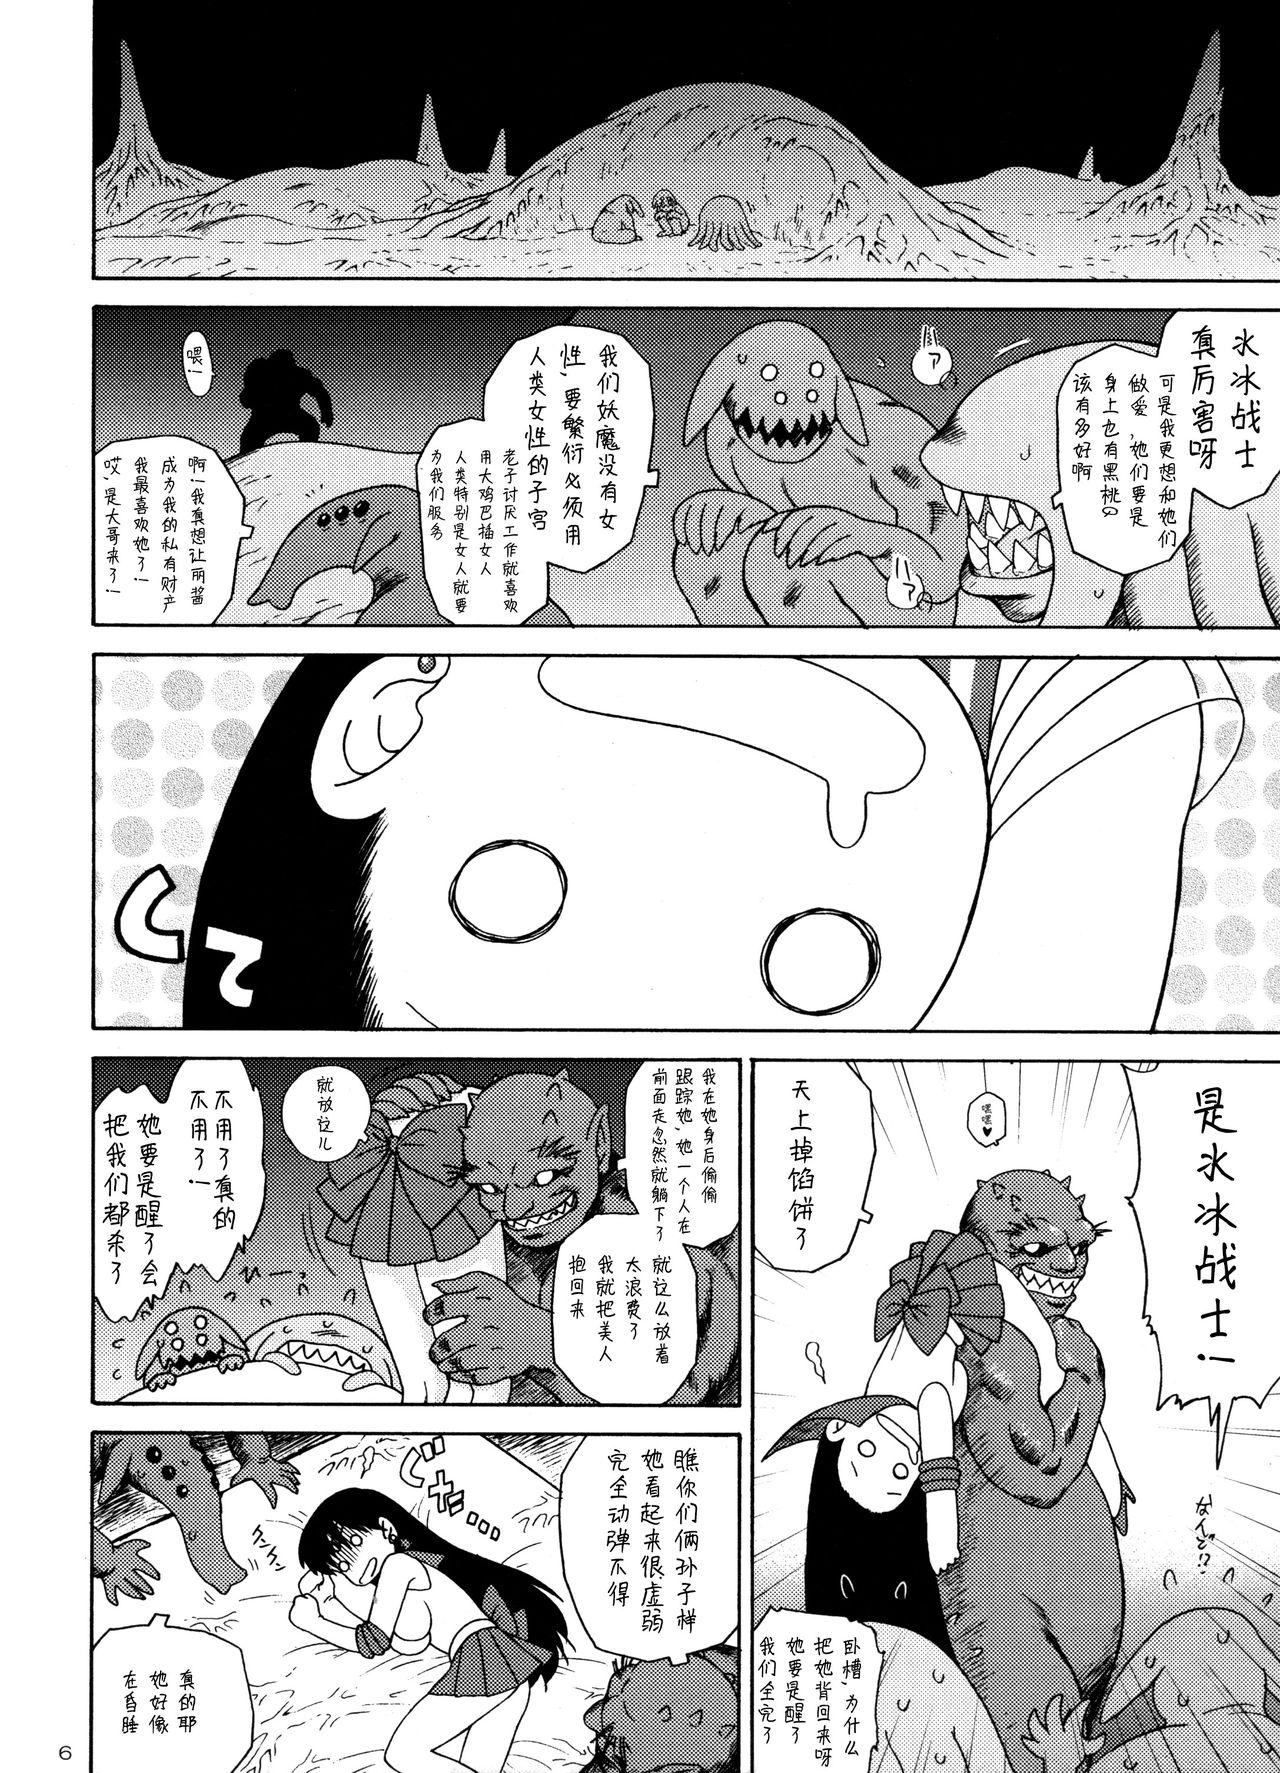 Hot Brunette QUEEN OF SPADES - 黑桃皇后 - Sailor moon Ethnic - Page 9